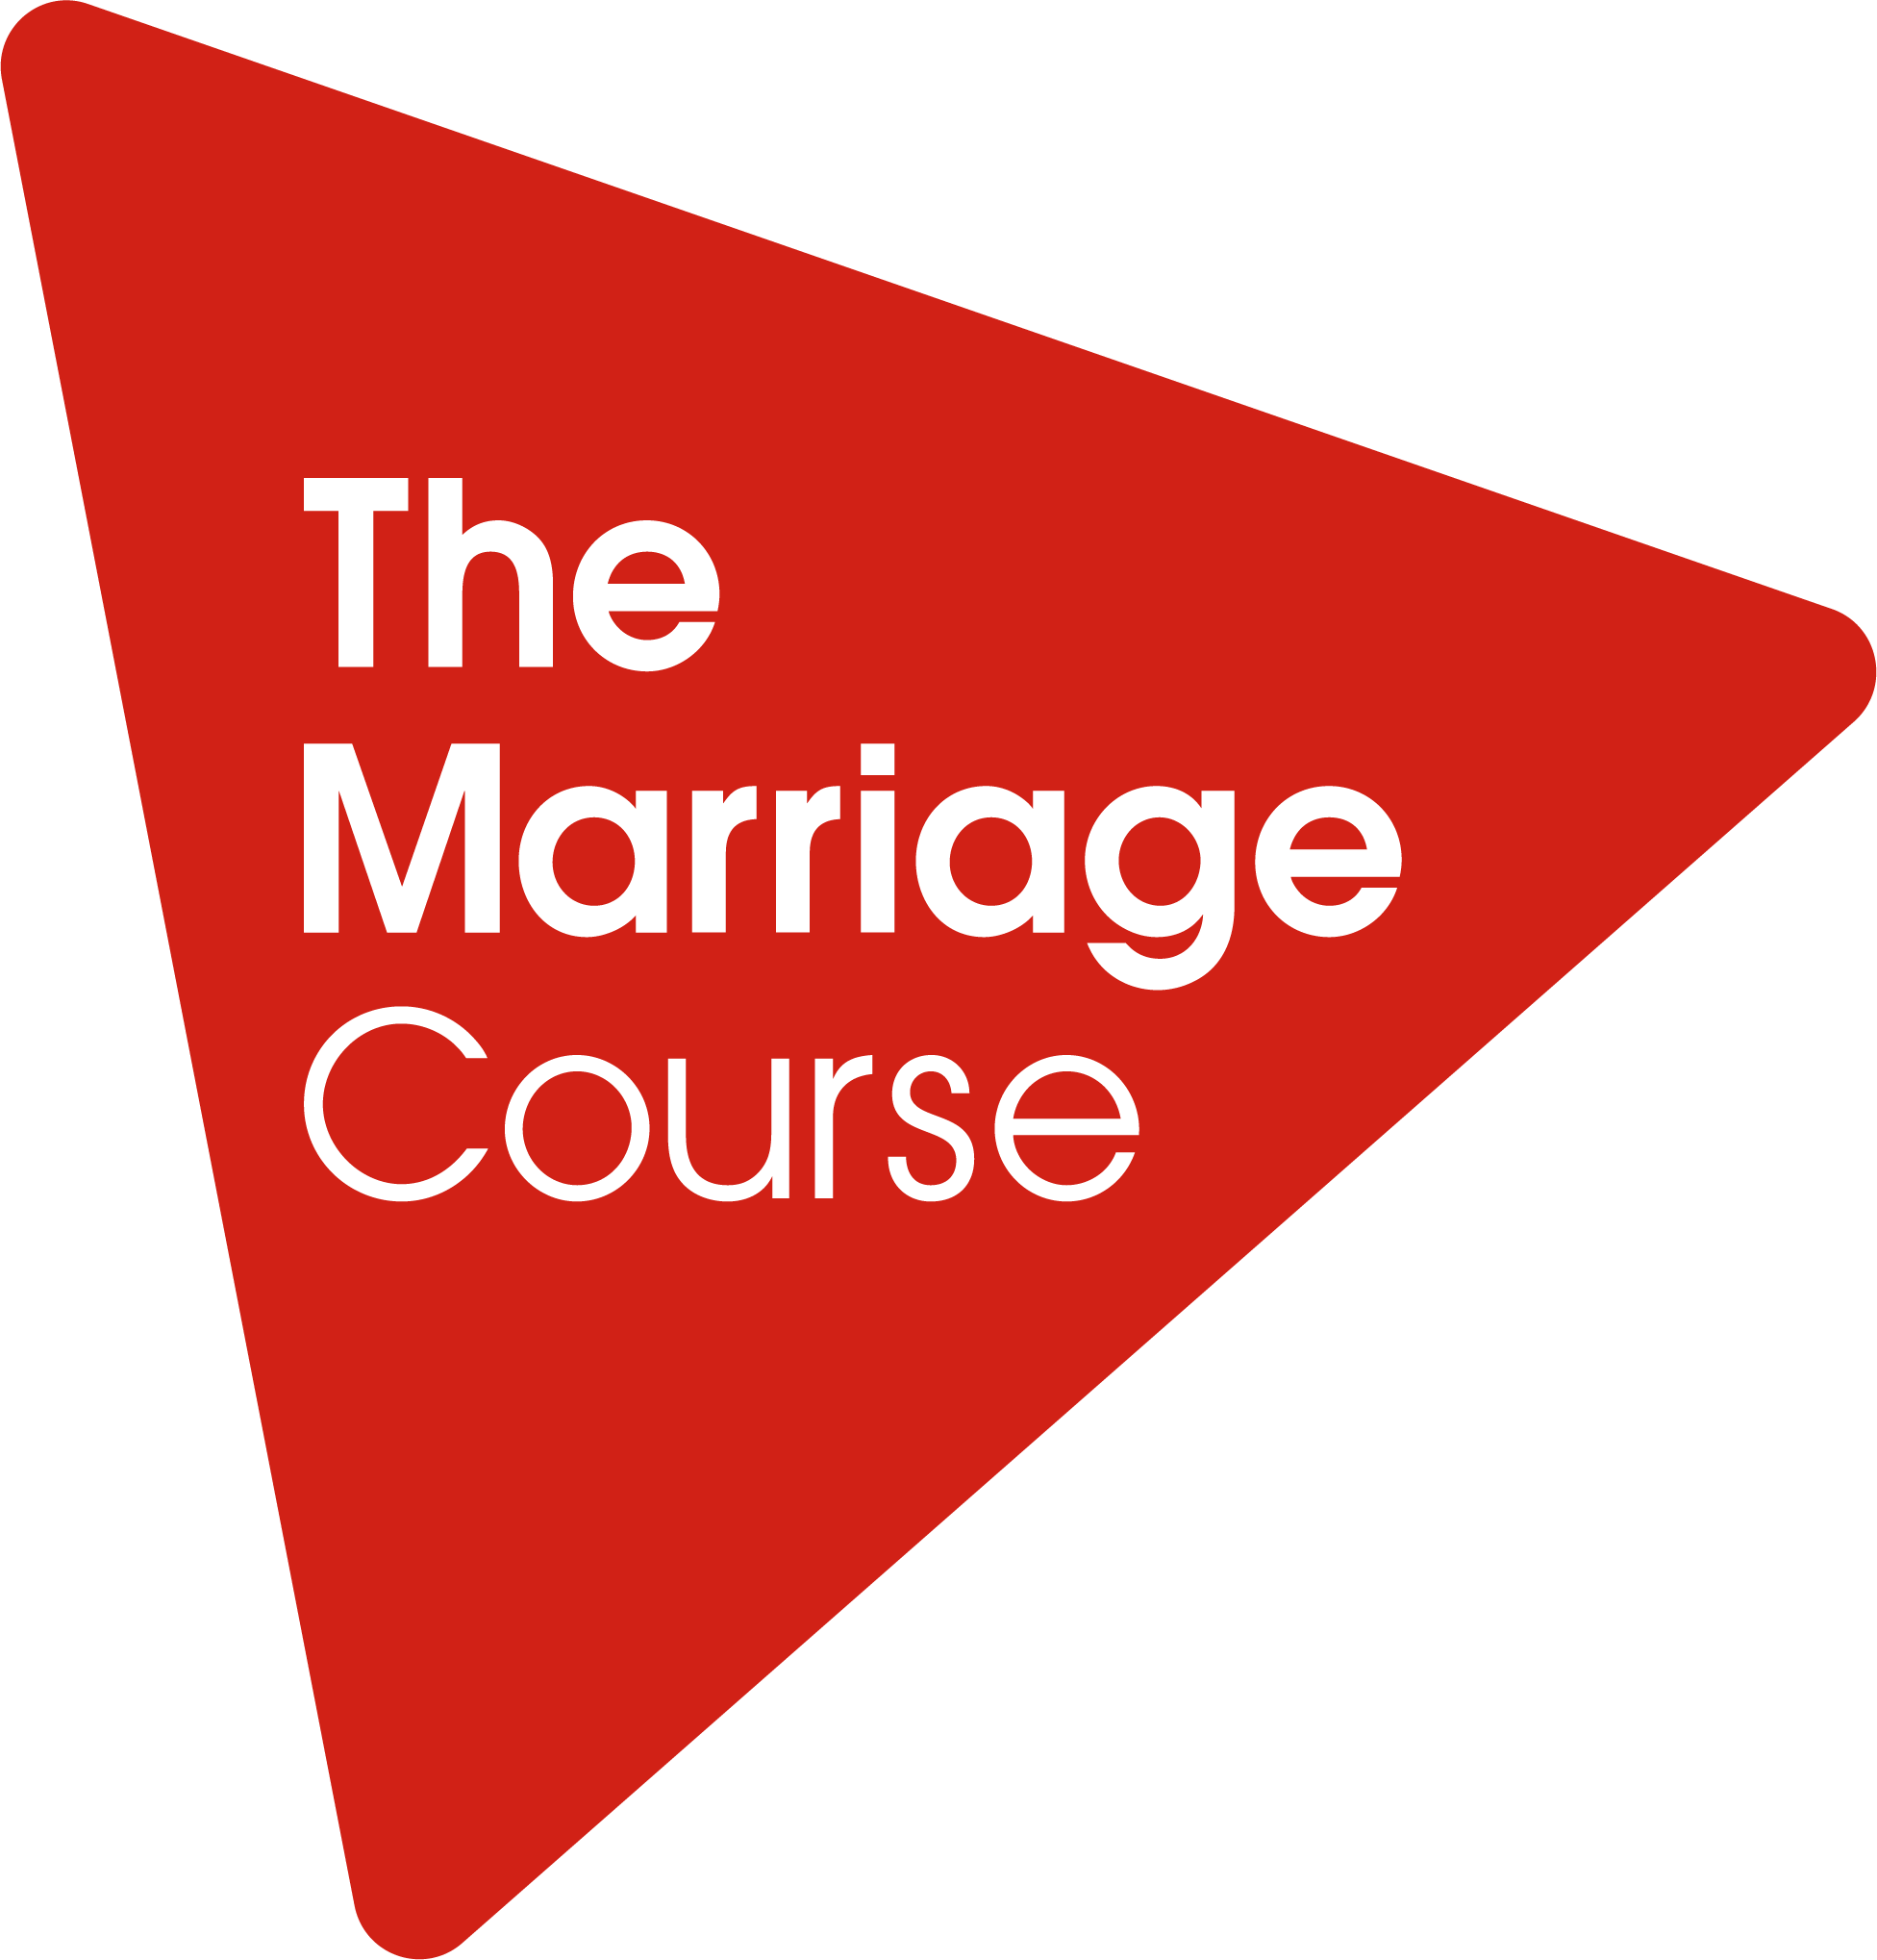 The Marriage Course logo